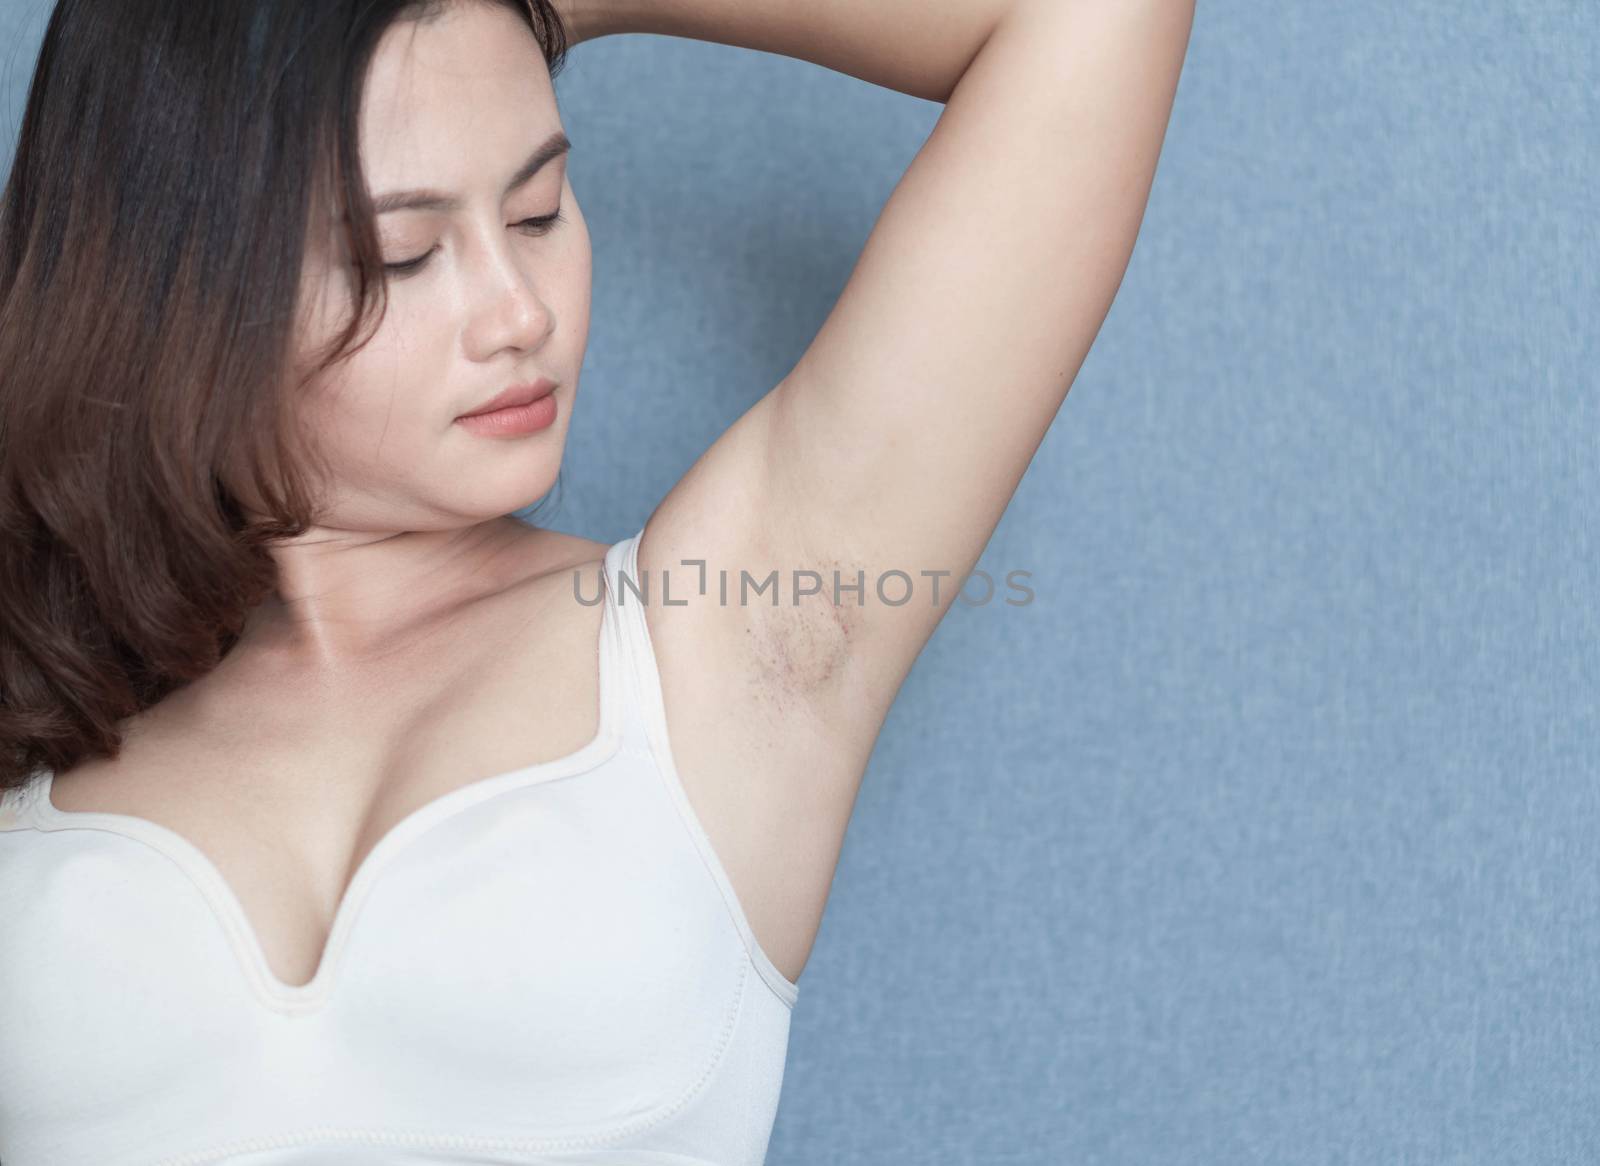 Women problem black armpit with grey background for skin care an by pt.pongsak@gmail.com